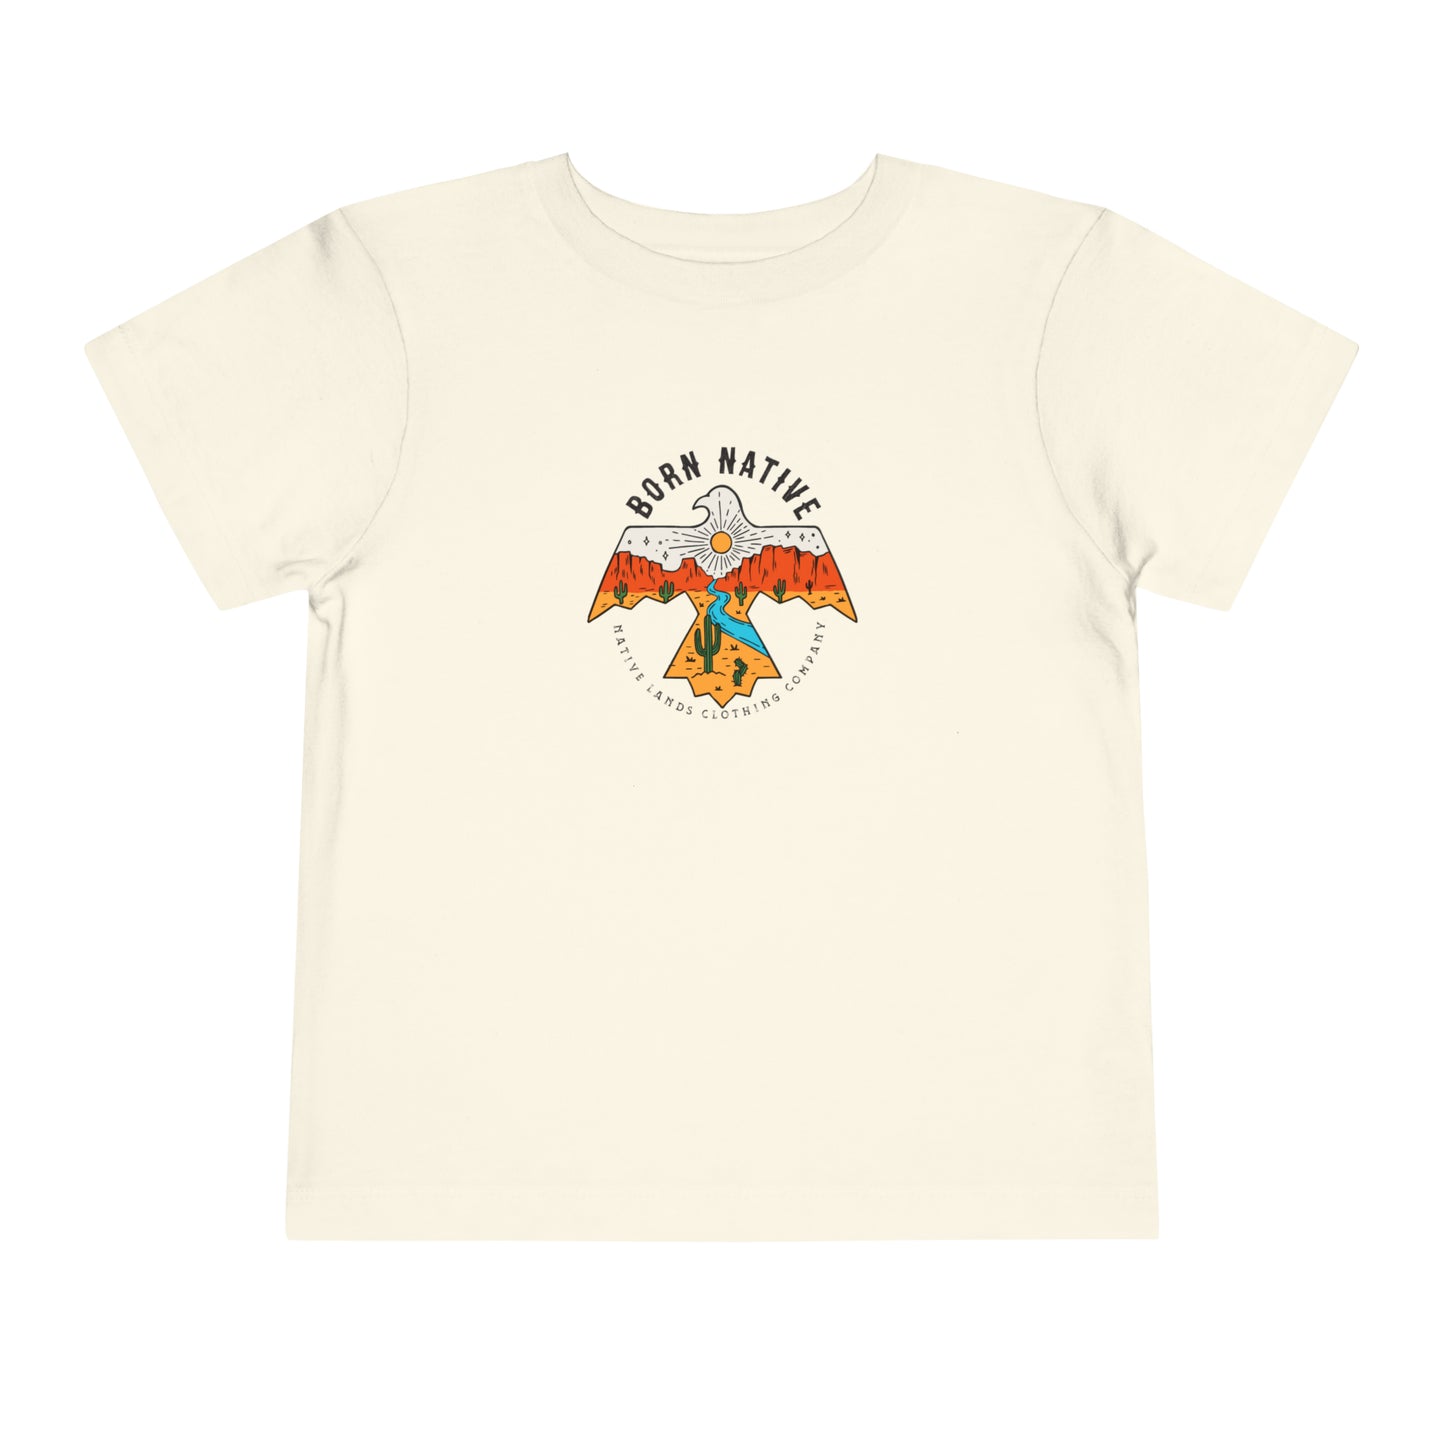 Toddler Born Native Shirt Cotton Native American